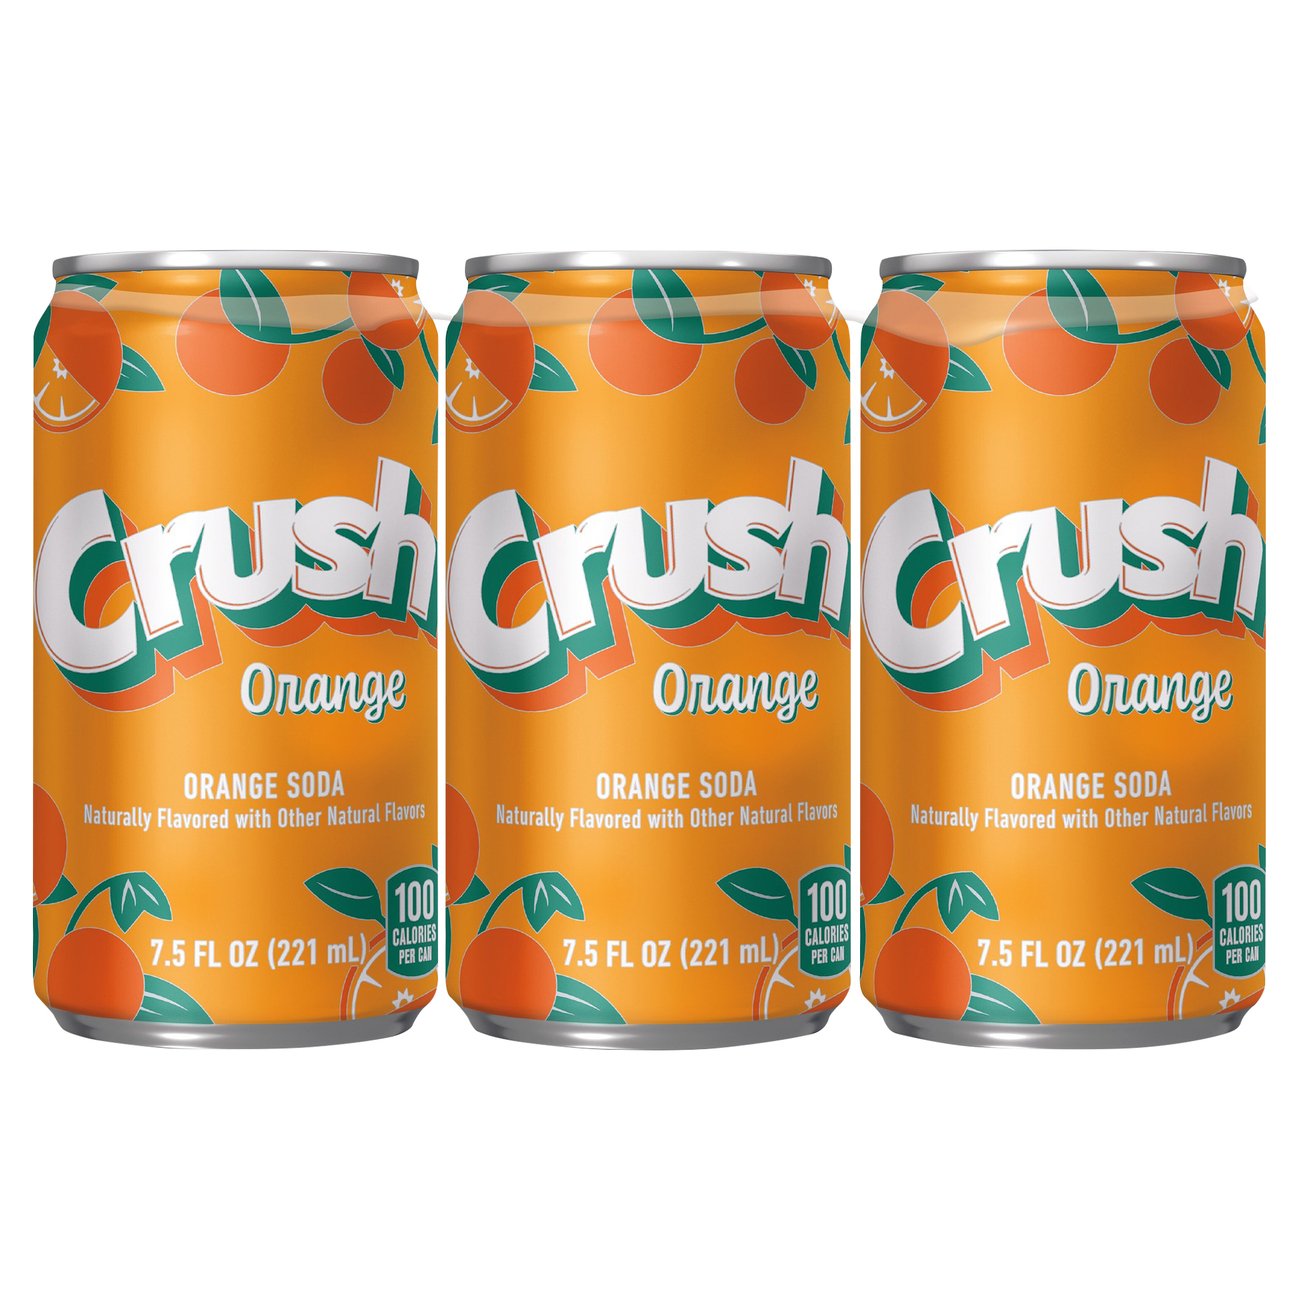 Crush Orange Soda 7.5 oz Cans